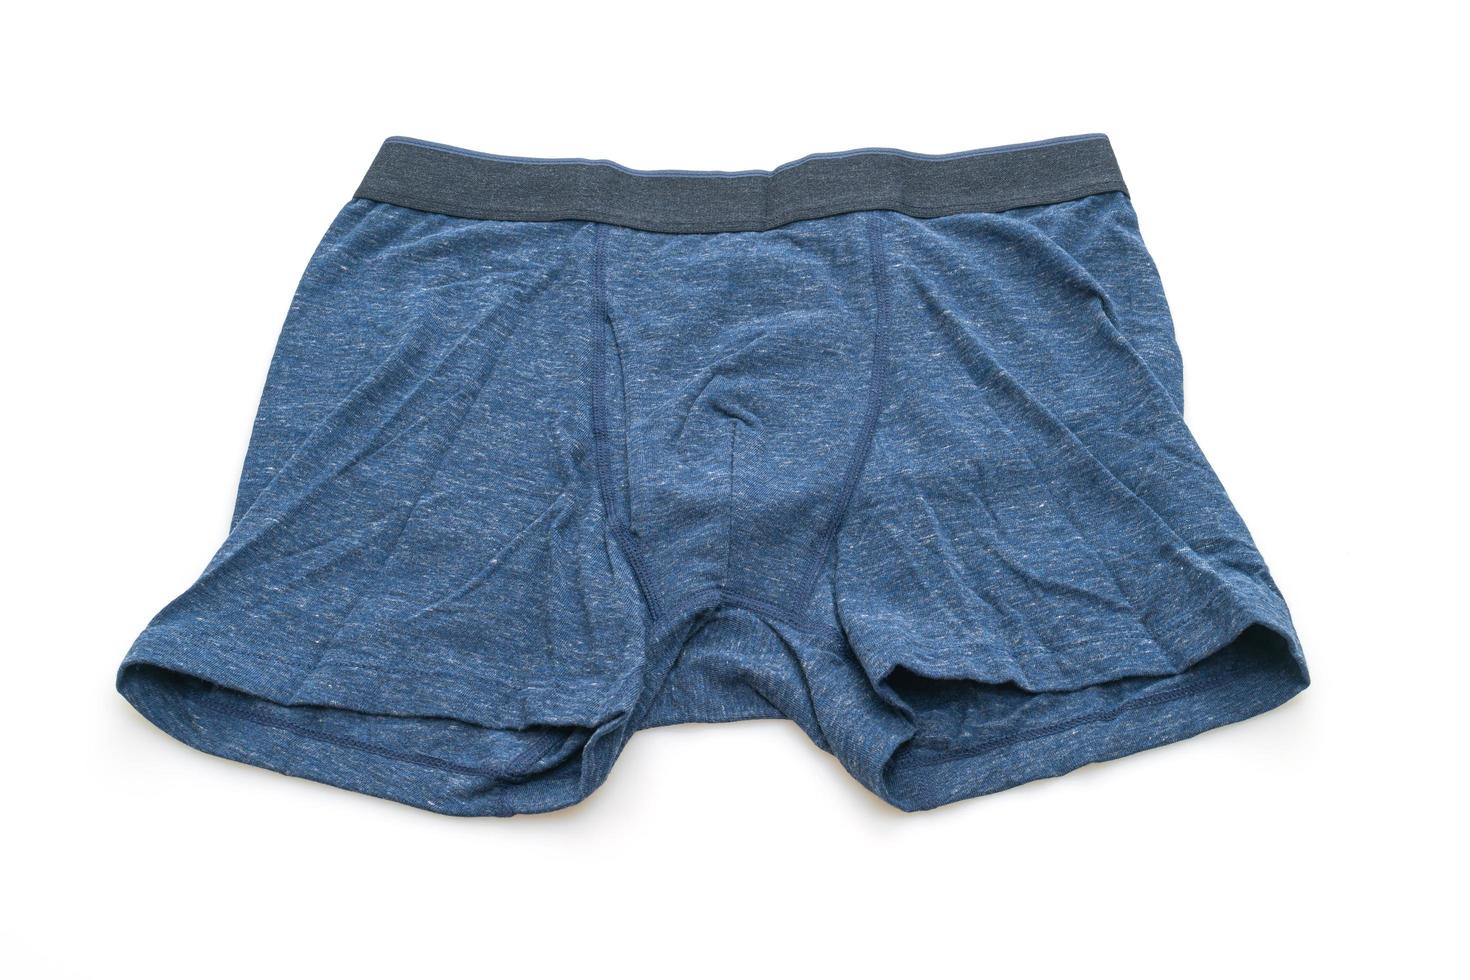 Blue men's underwear isolated on white background photo